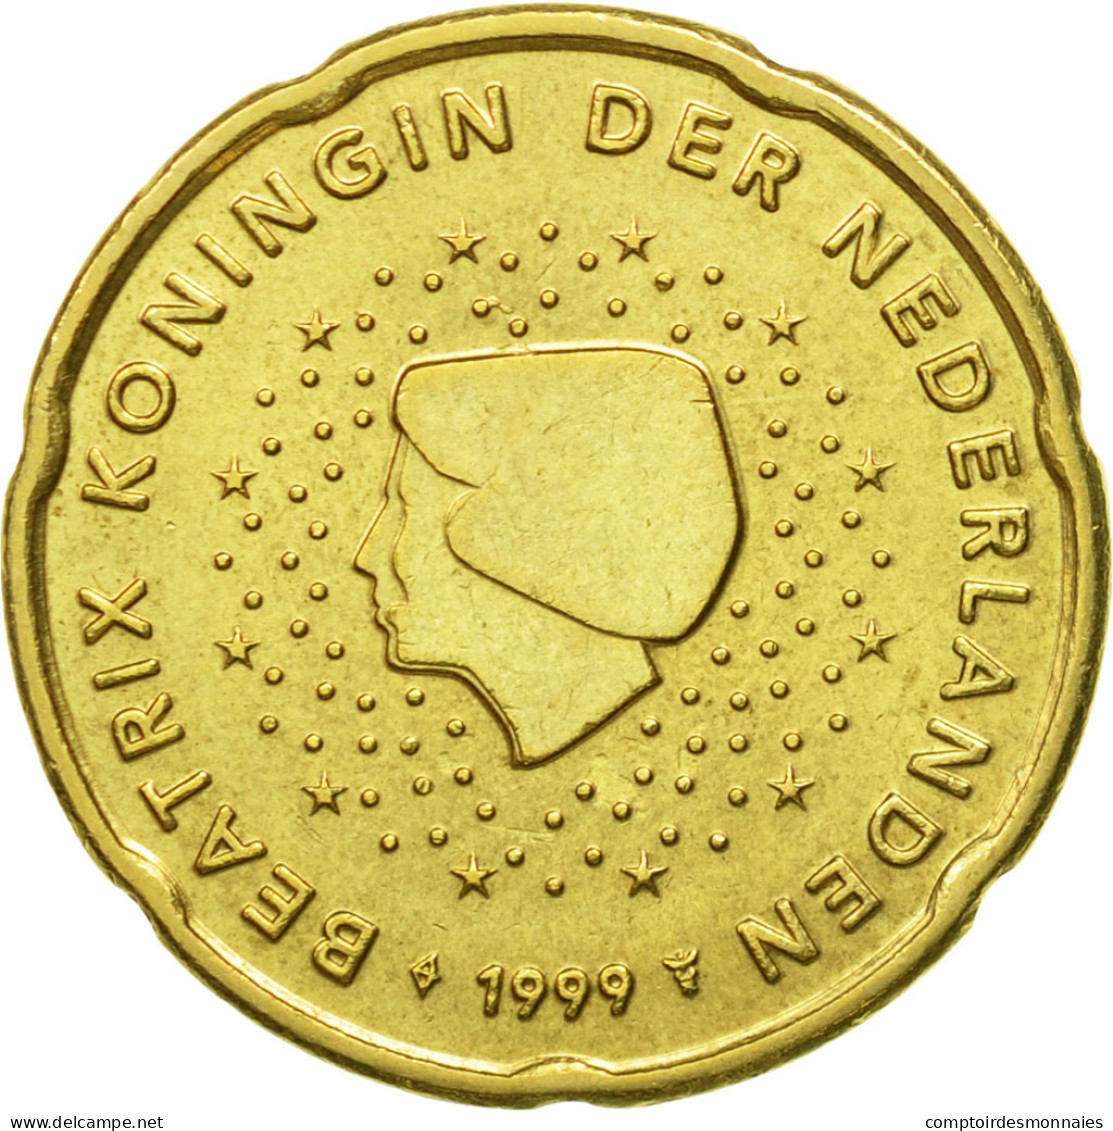 Pays-Bas, 20 Euro Cent, 1999, TTB+, Laiton, KM:238 - Pays-Bas